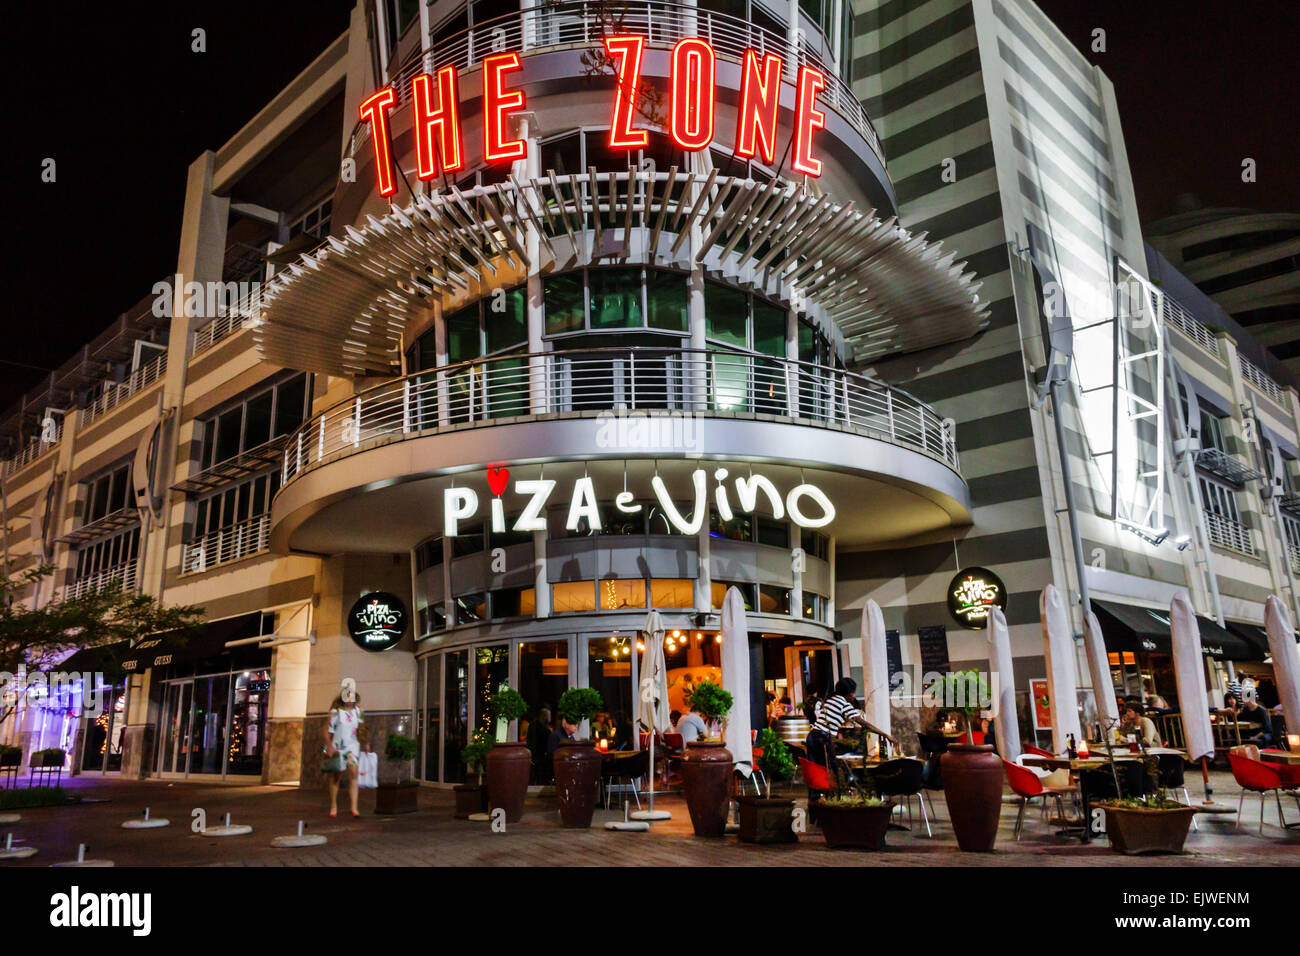 Johannesburg South Africa,Rosebank,The Zone Mall,Piza e Vino,restaurant restaurants food dining cafe cafes,front,entrance,night evening,SAfri150306153 Stock Photo